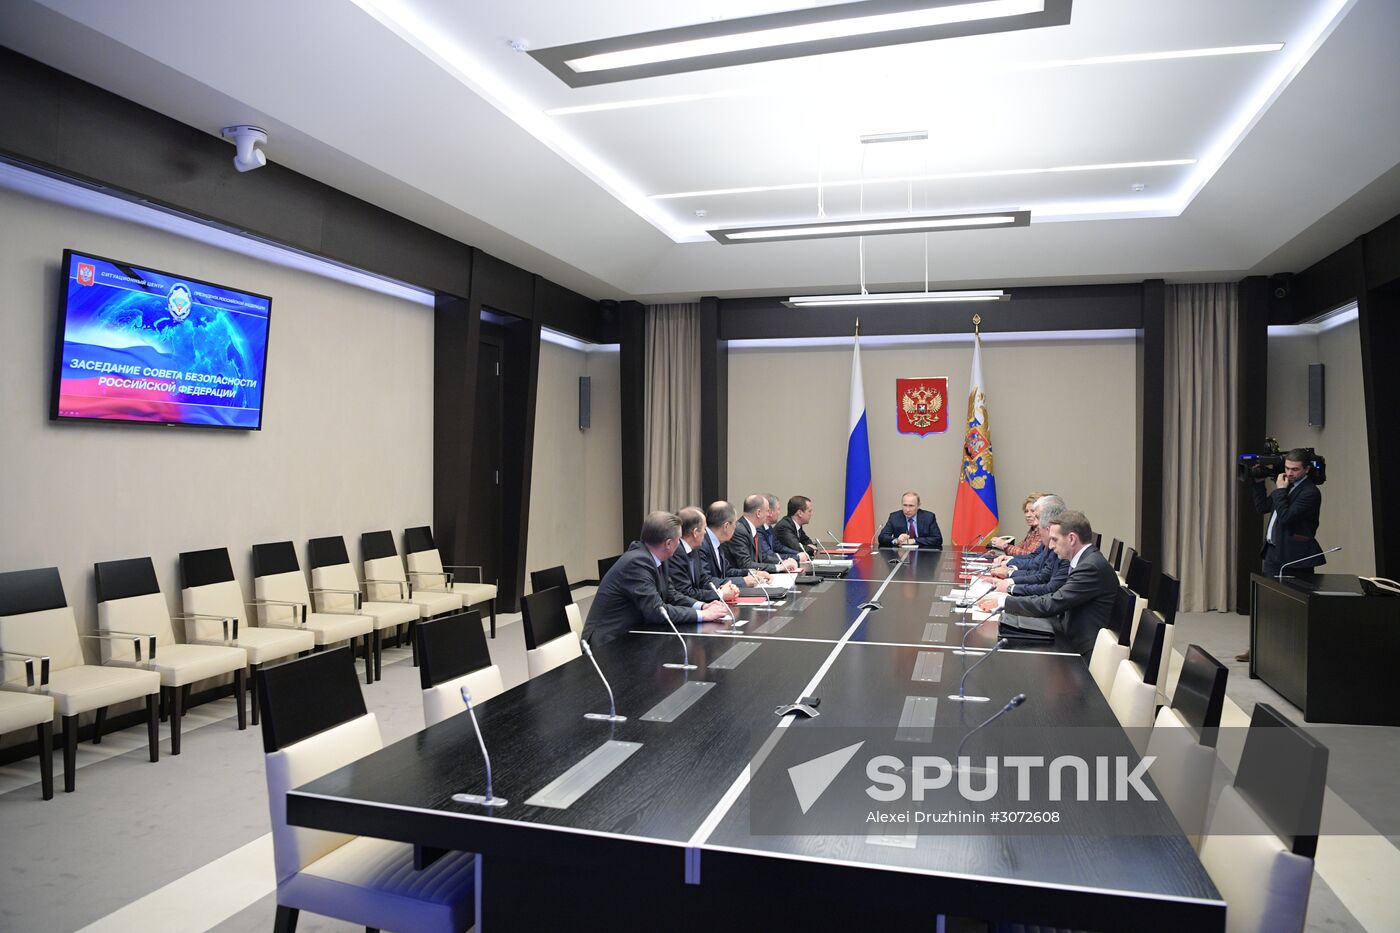 Russian President Vladimir Putin holds Security Council meeting